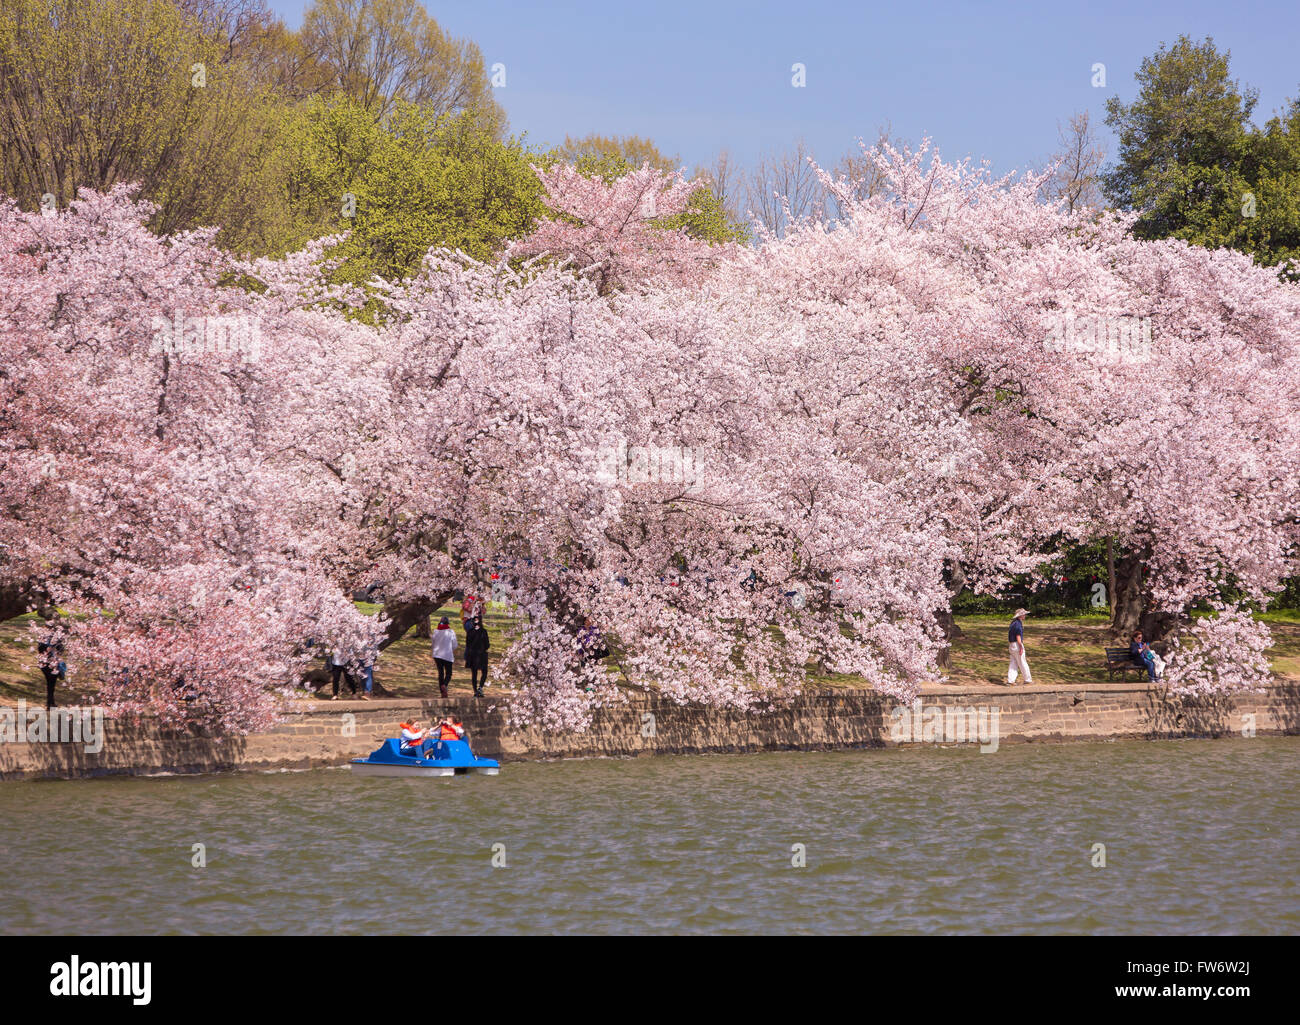 WASHINGTON, DC, USA - Menschen genießen Kirschbäume Blüten am Tidal Basin. Stockfoto